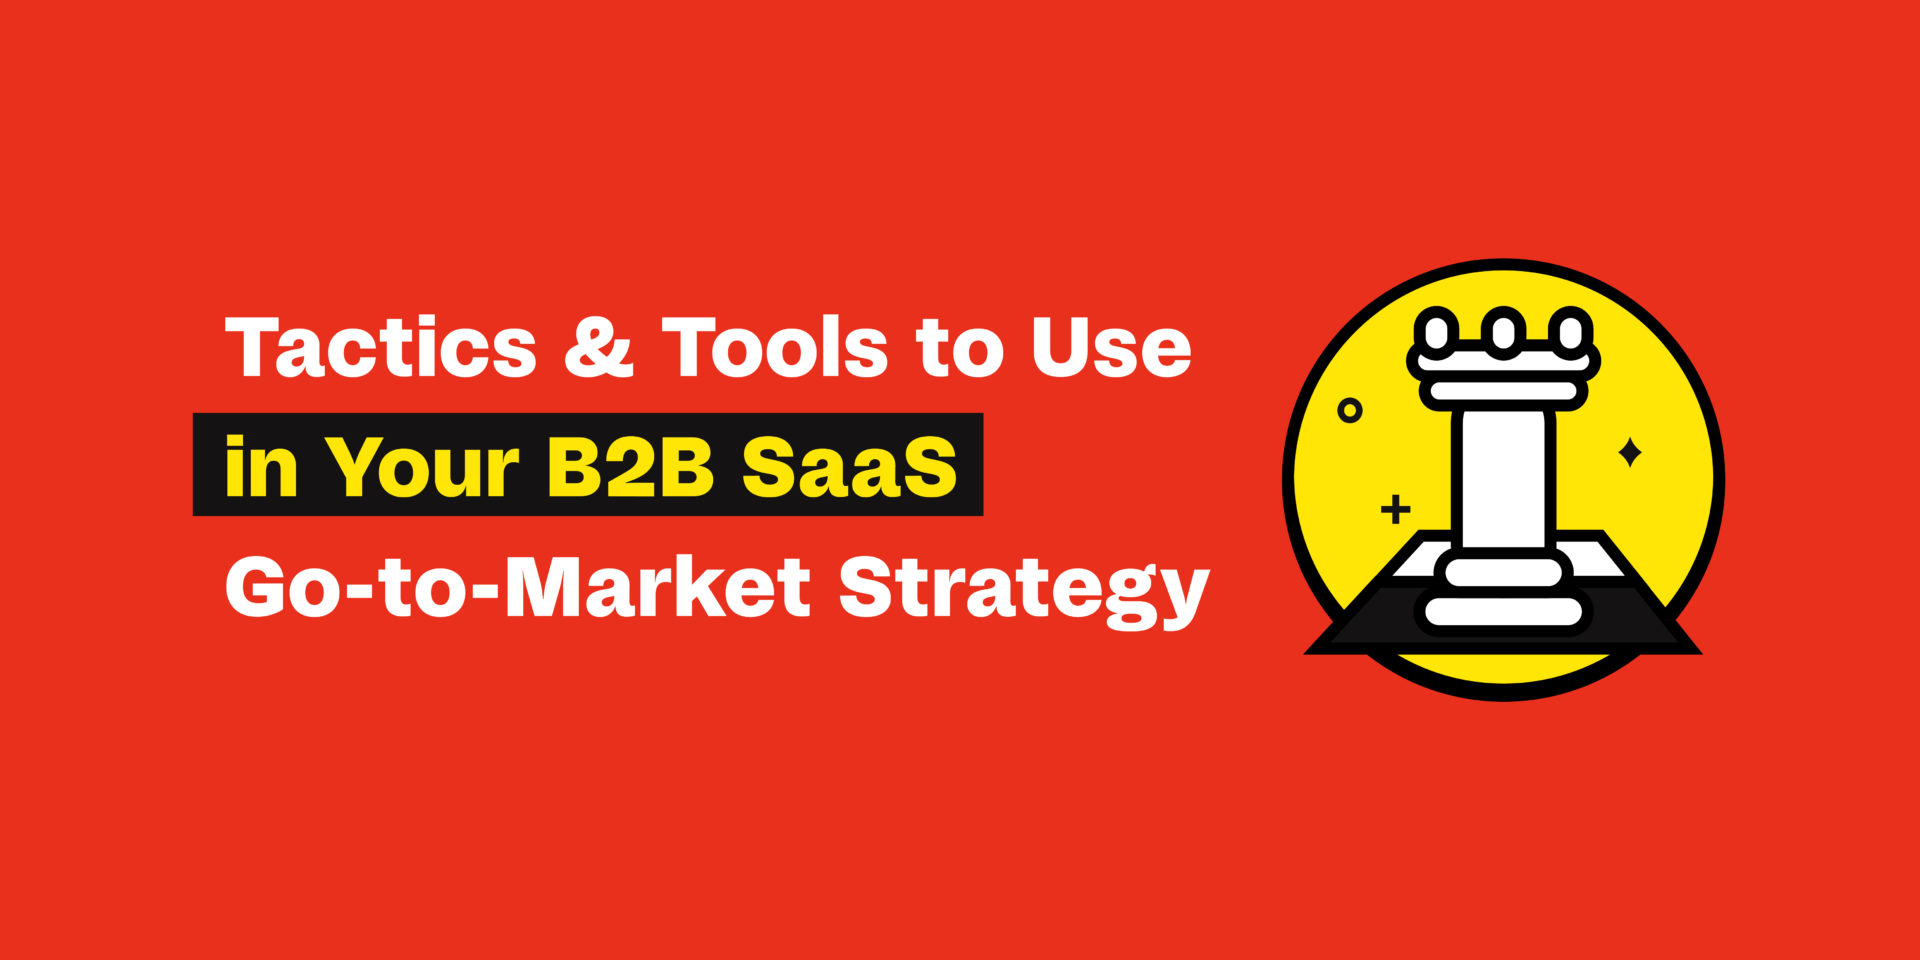 b2b-saas-tools-tactics